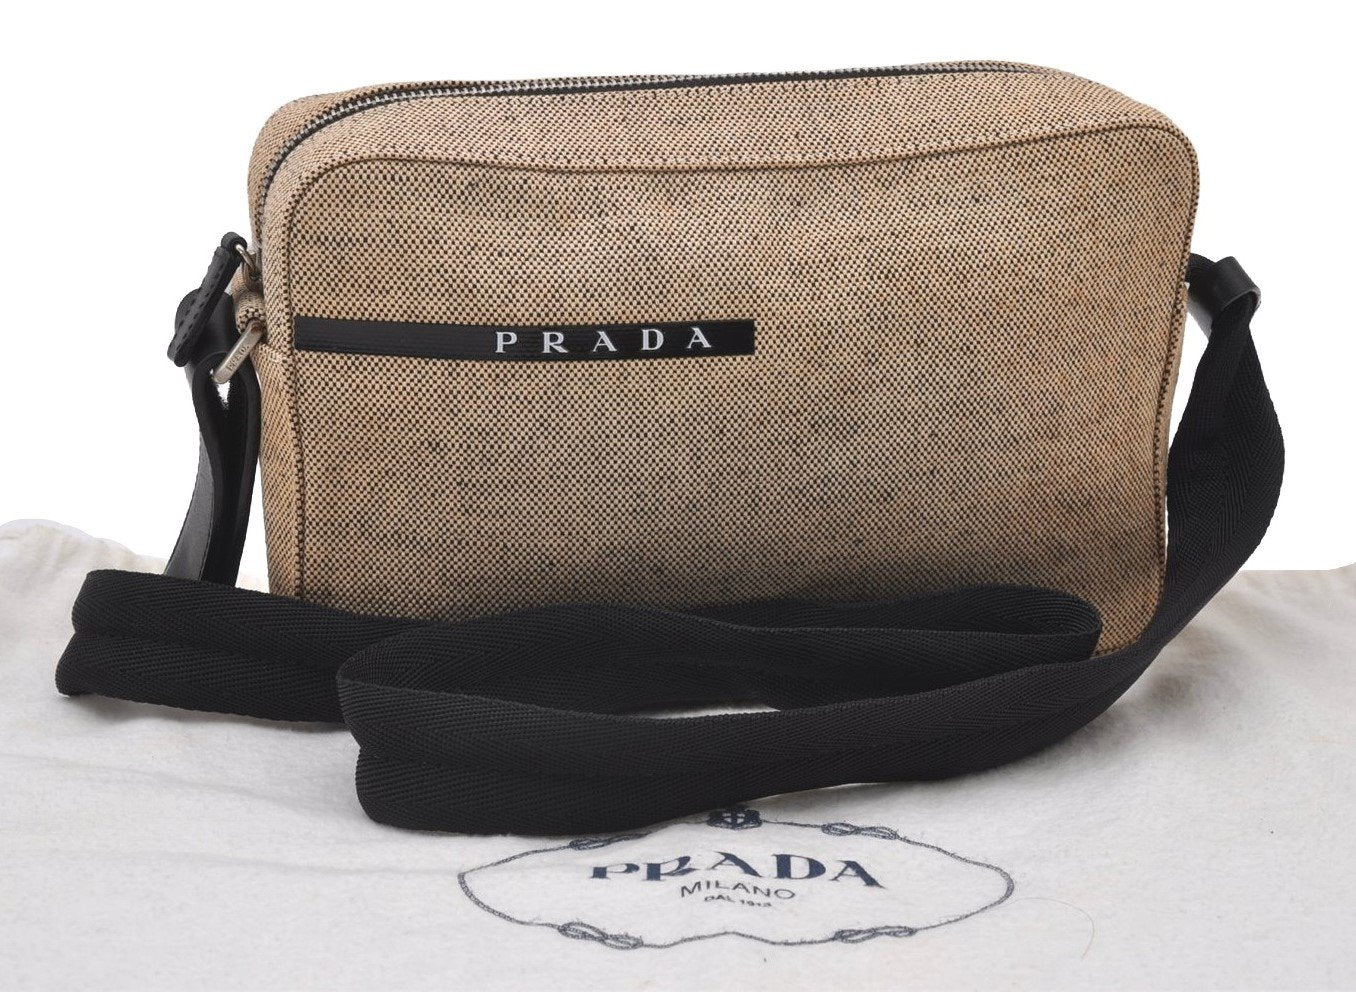 Authentic PRADA Sports Canvas Leather Shoulder Cross Body Bag Purse Beige 3275I